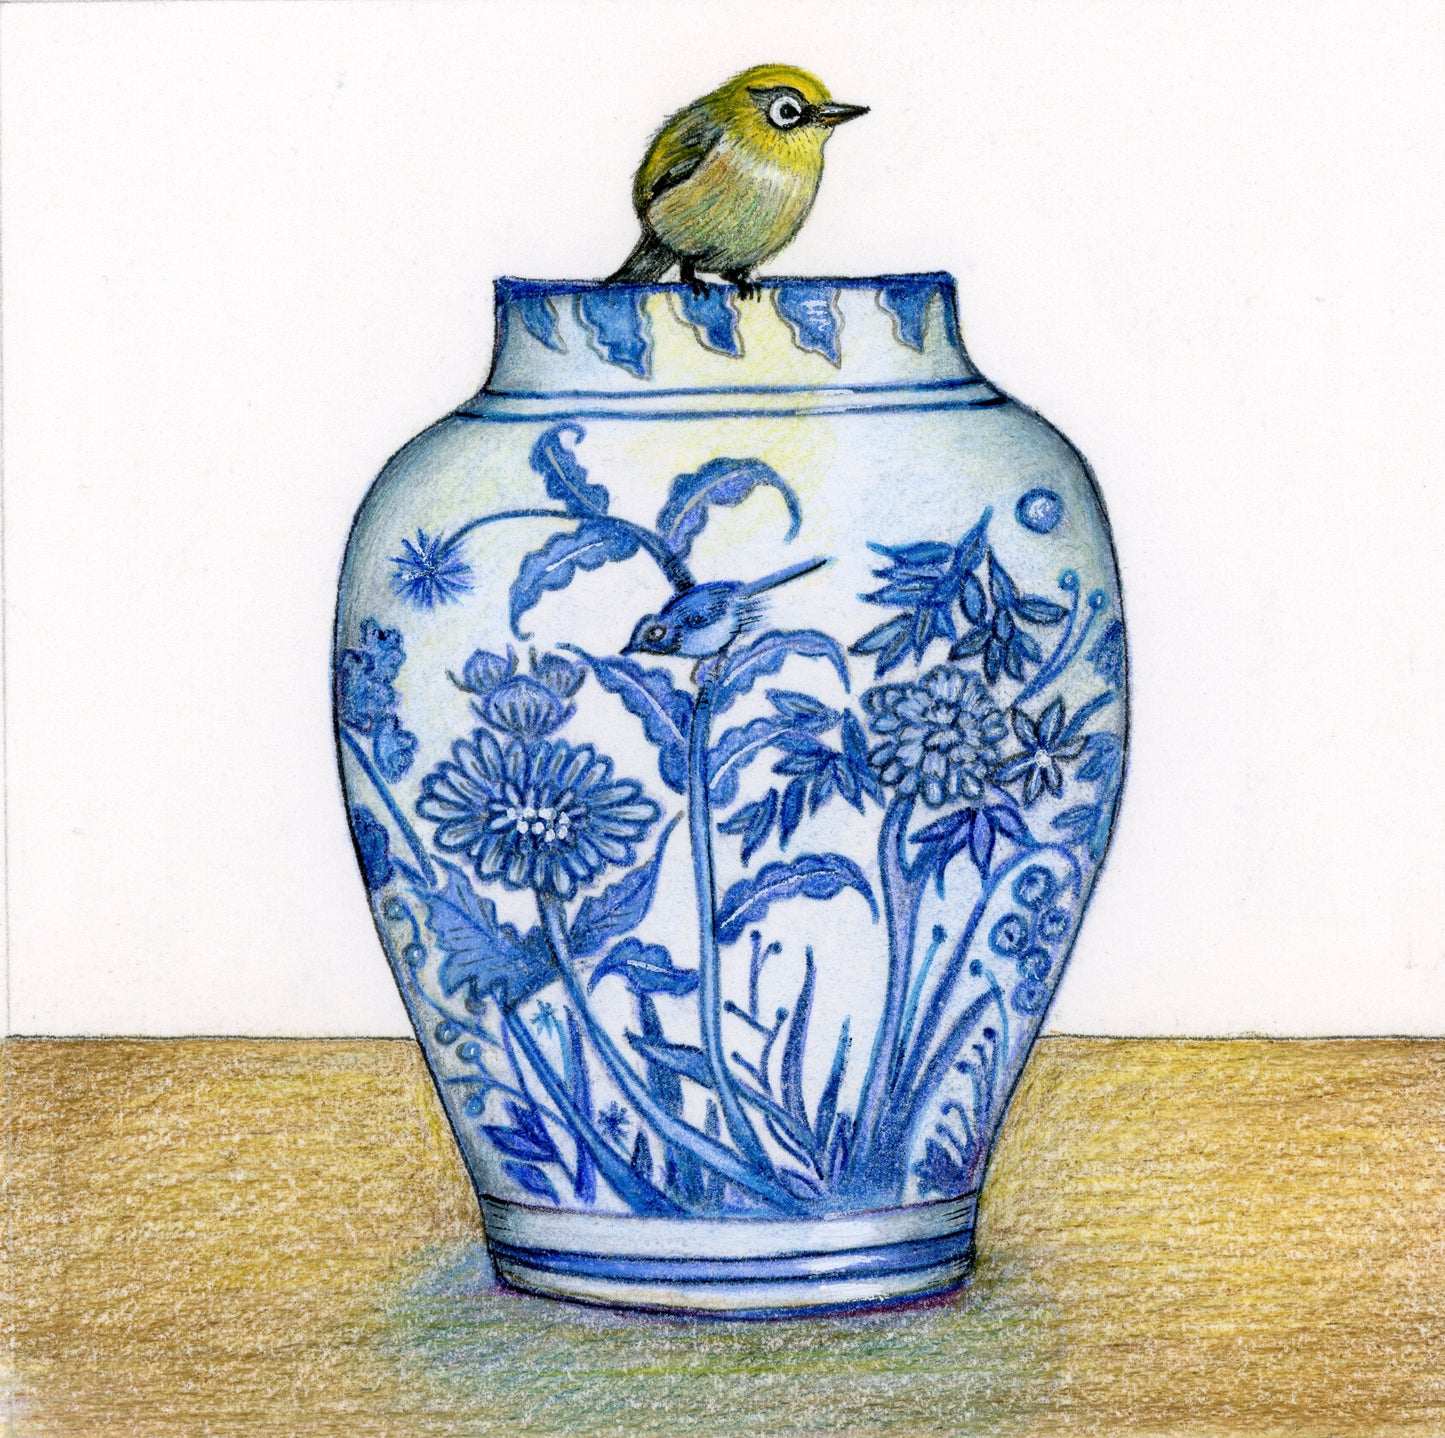 Silver Eye on blue & white china garden vase |  2021